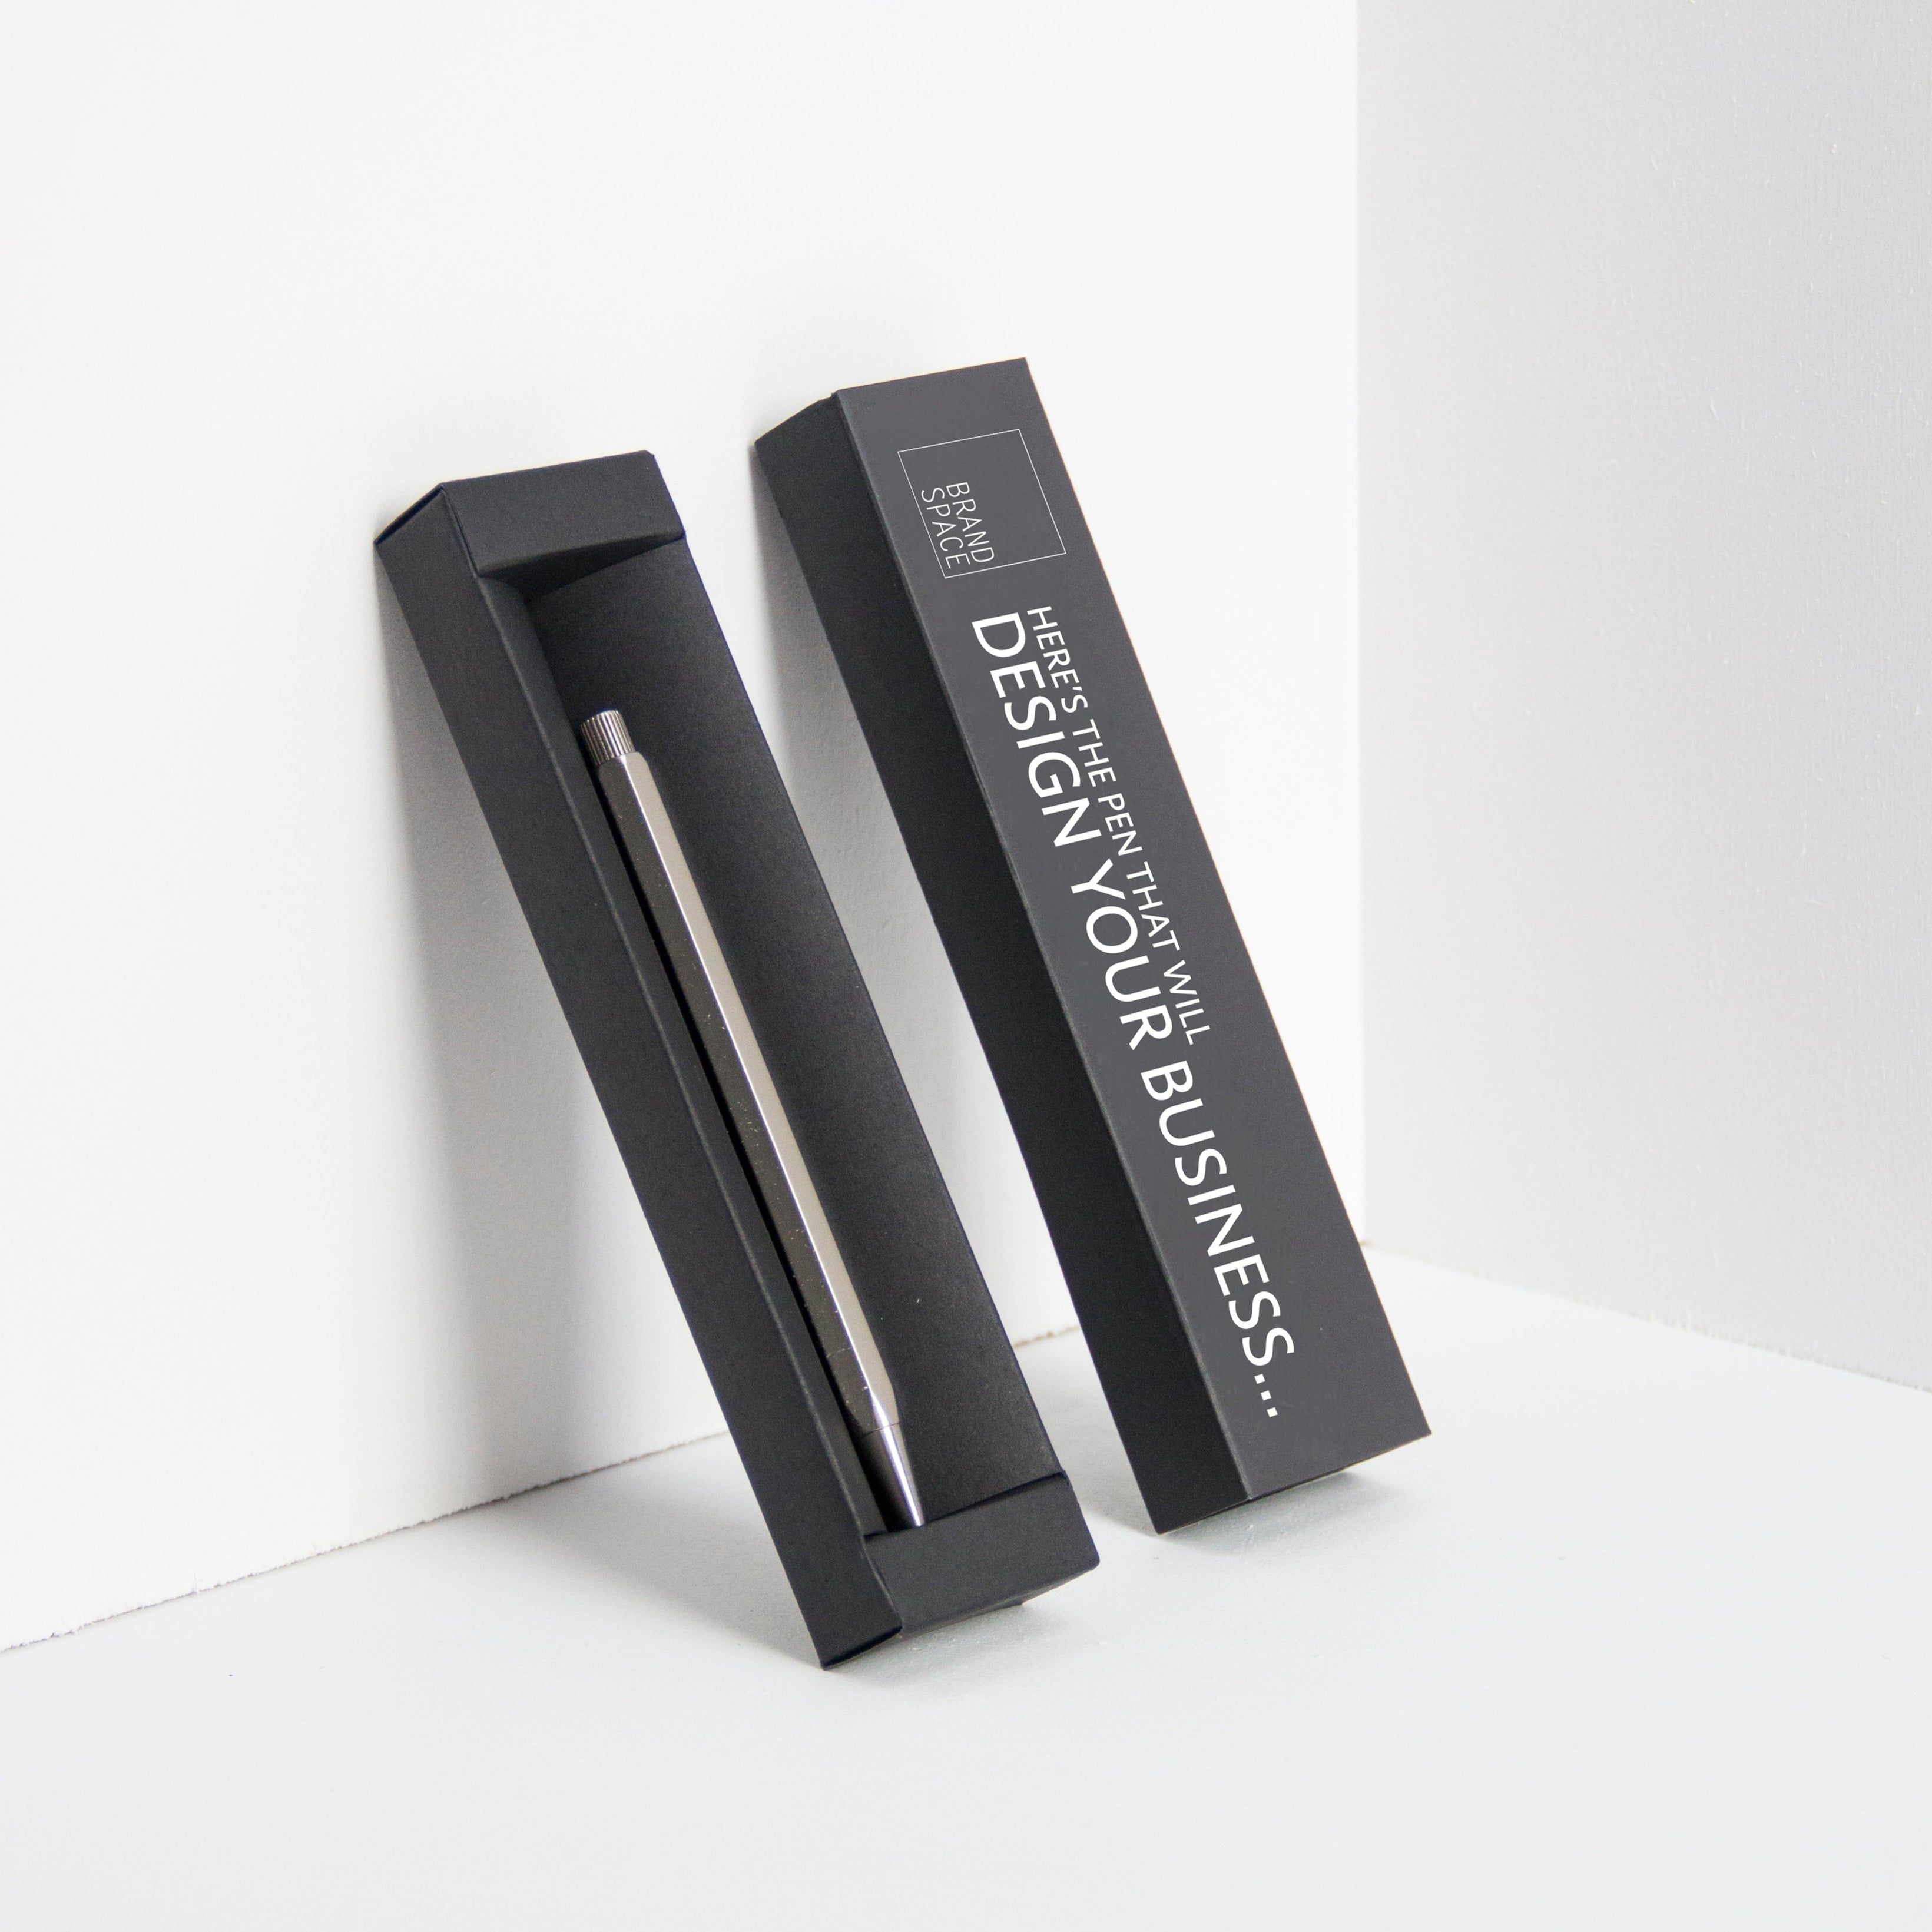 Customized black box for pens - Octàgon Design